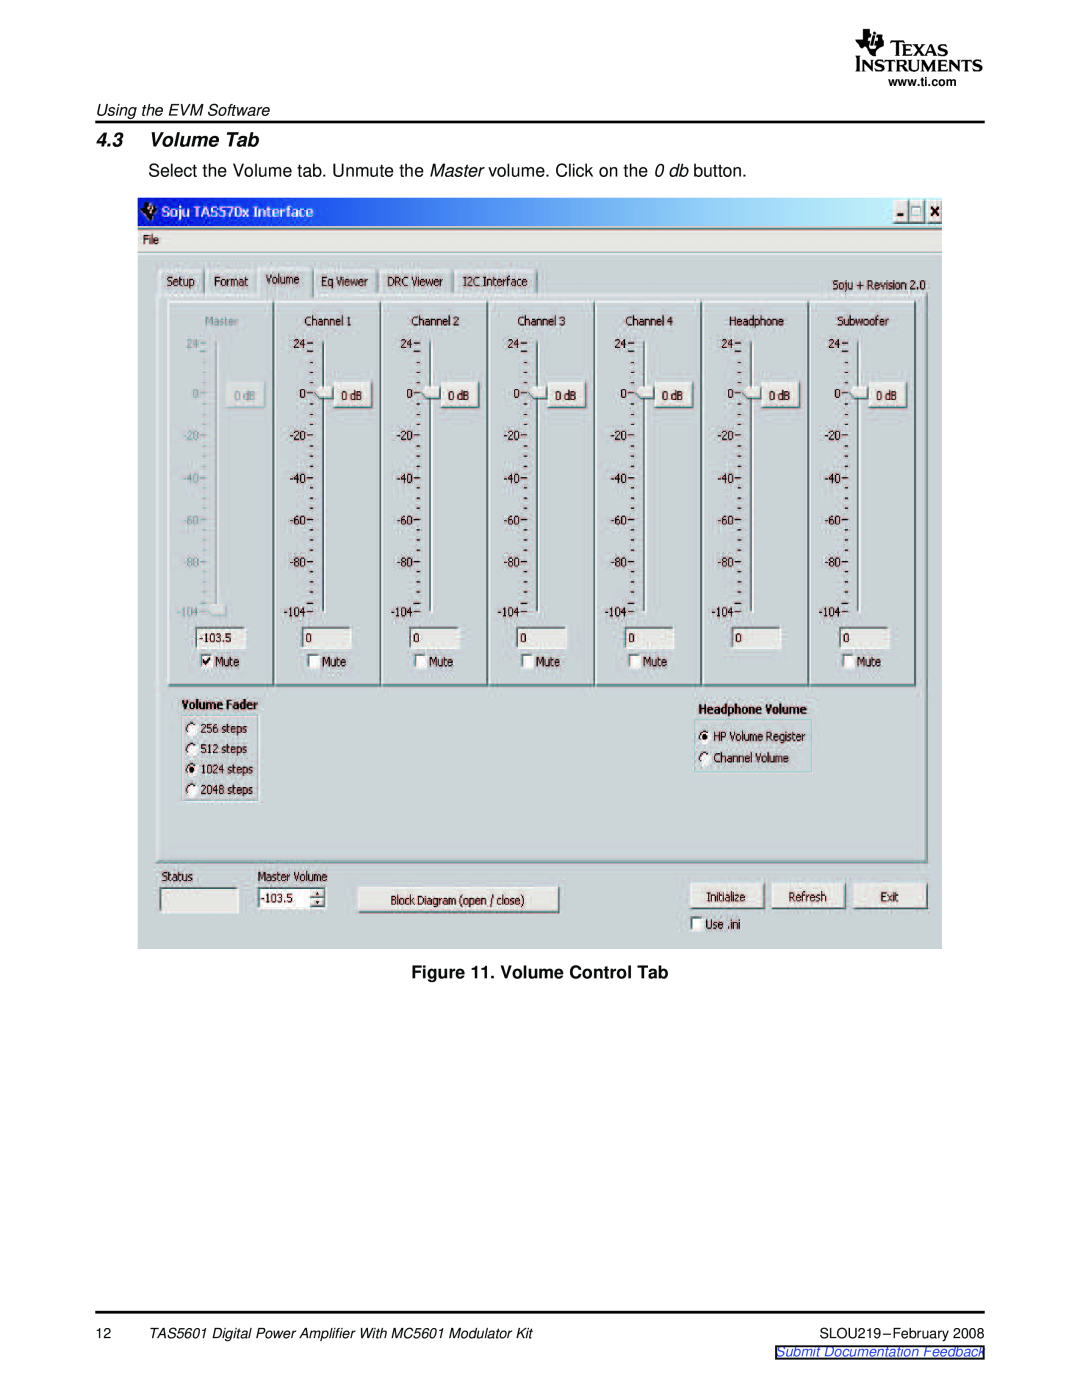 Texas Instruments TAS5601 manual 4.3Volume Tab, Volume Control Tab, Using the EVM Software, Submit Documentation Feedback 